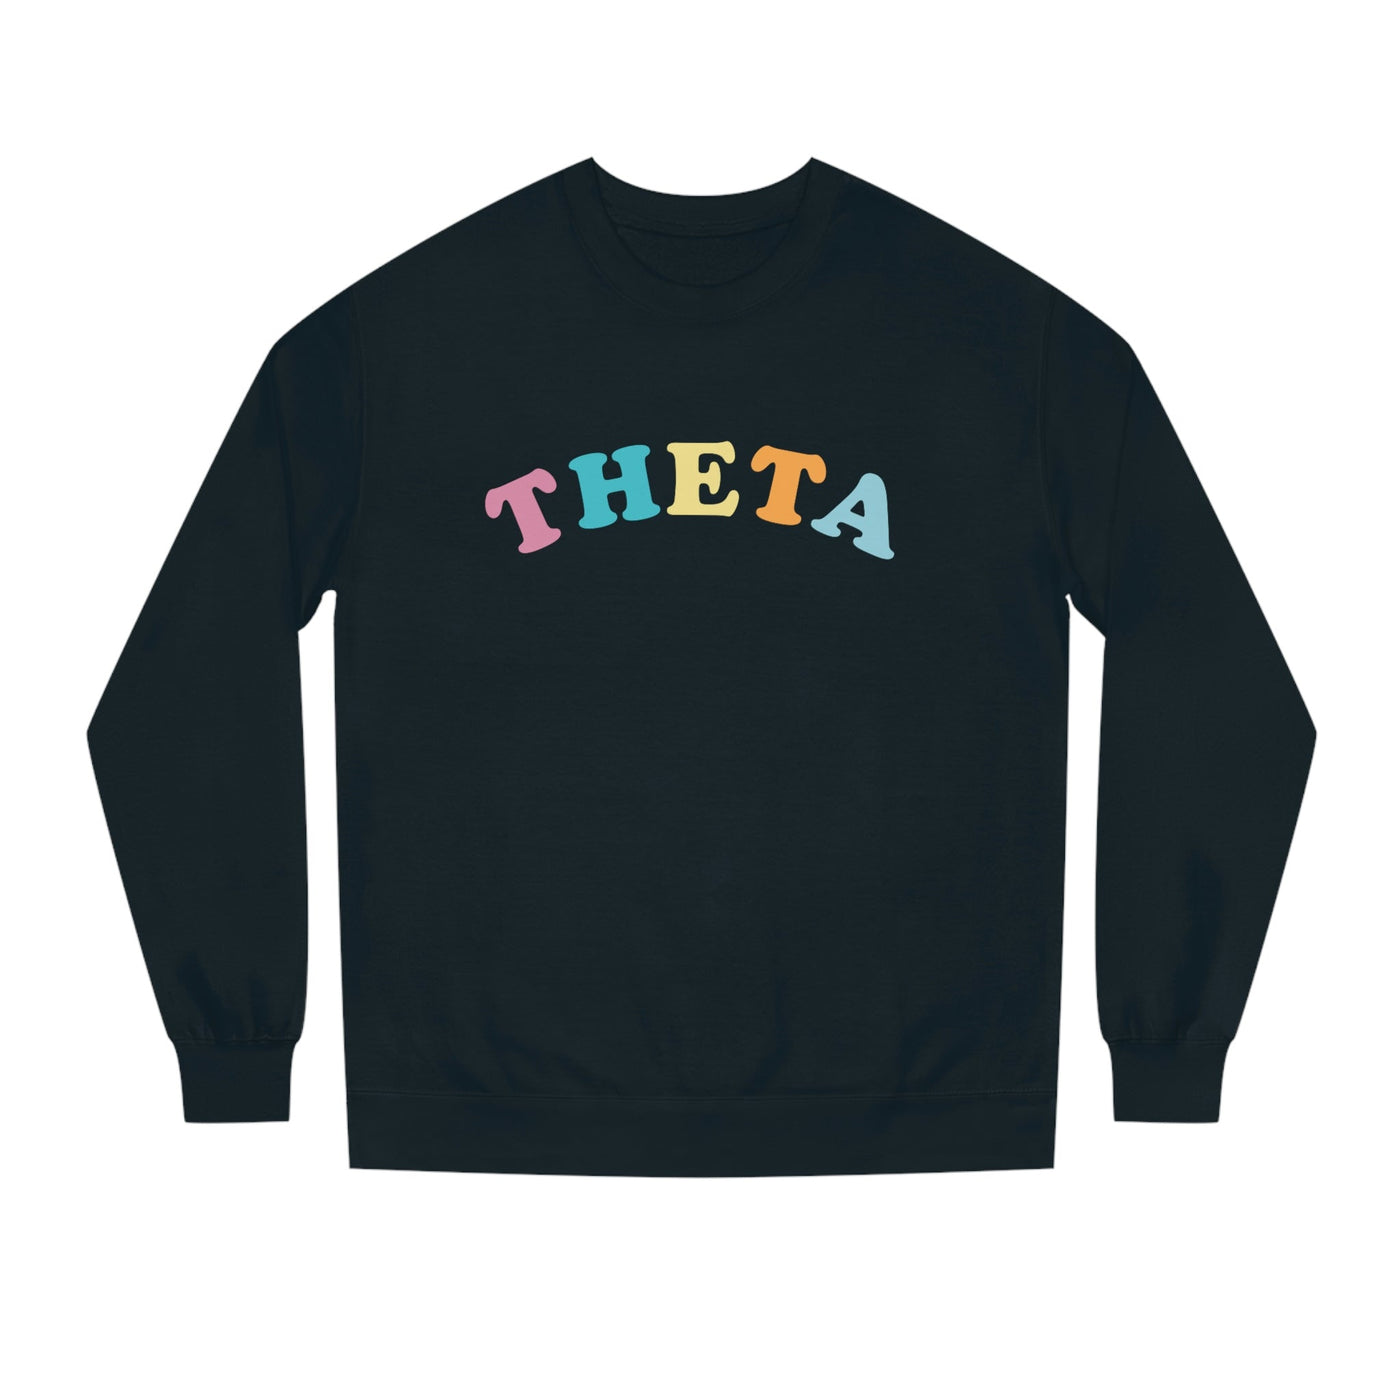 Kappa Alpha Theta Colorful Text Cute Theta Sorority Crewneck Sweatshirt